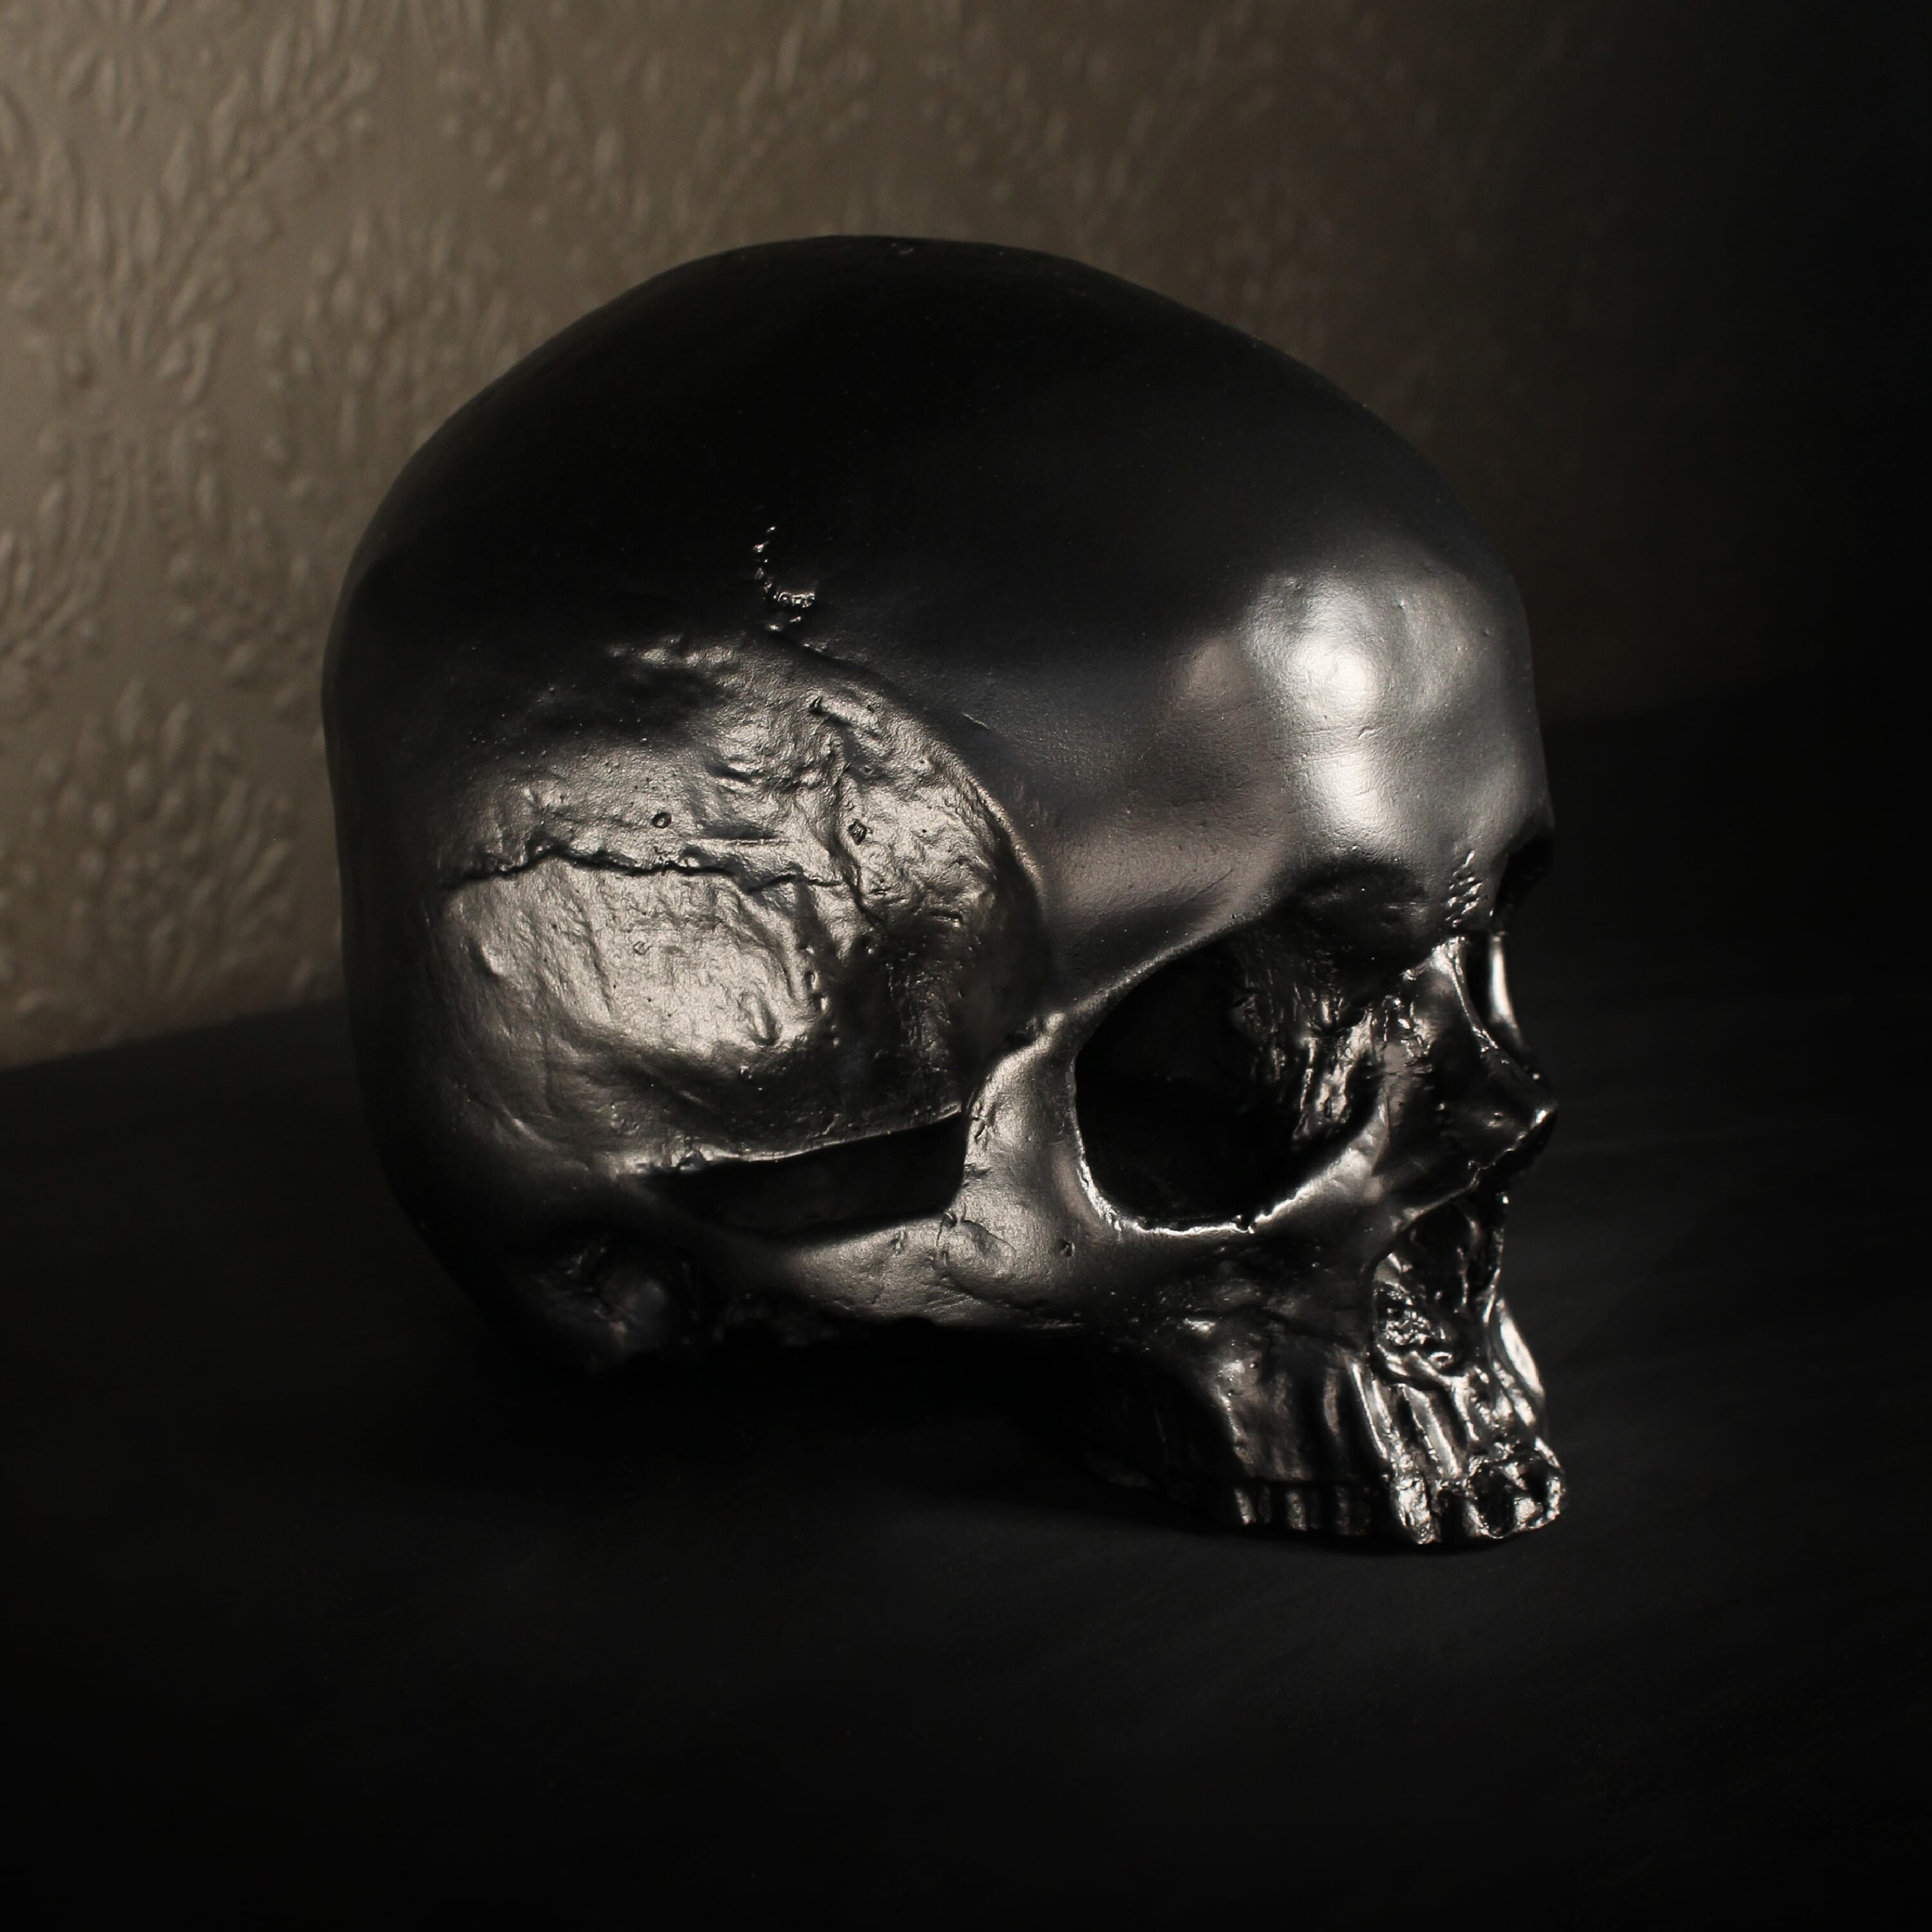 Replica Human Skull Ornament - Black